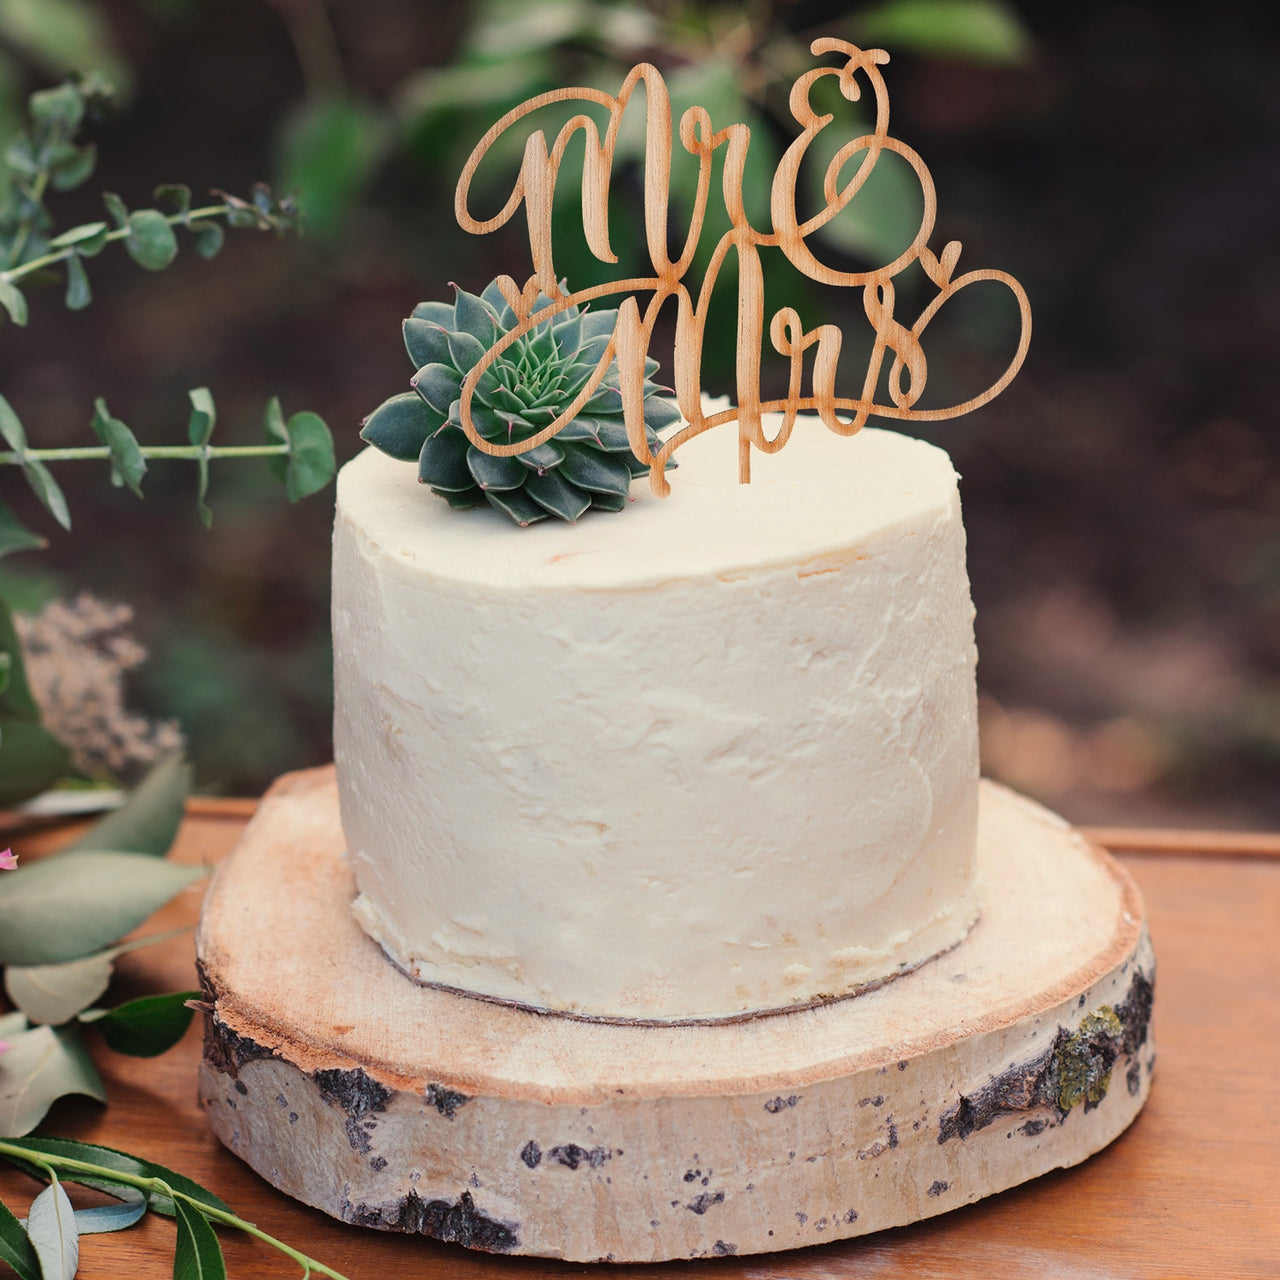 Mr. & Mrs. Wood Cake Topper - Alternate Image 2 | My Wedding Favors